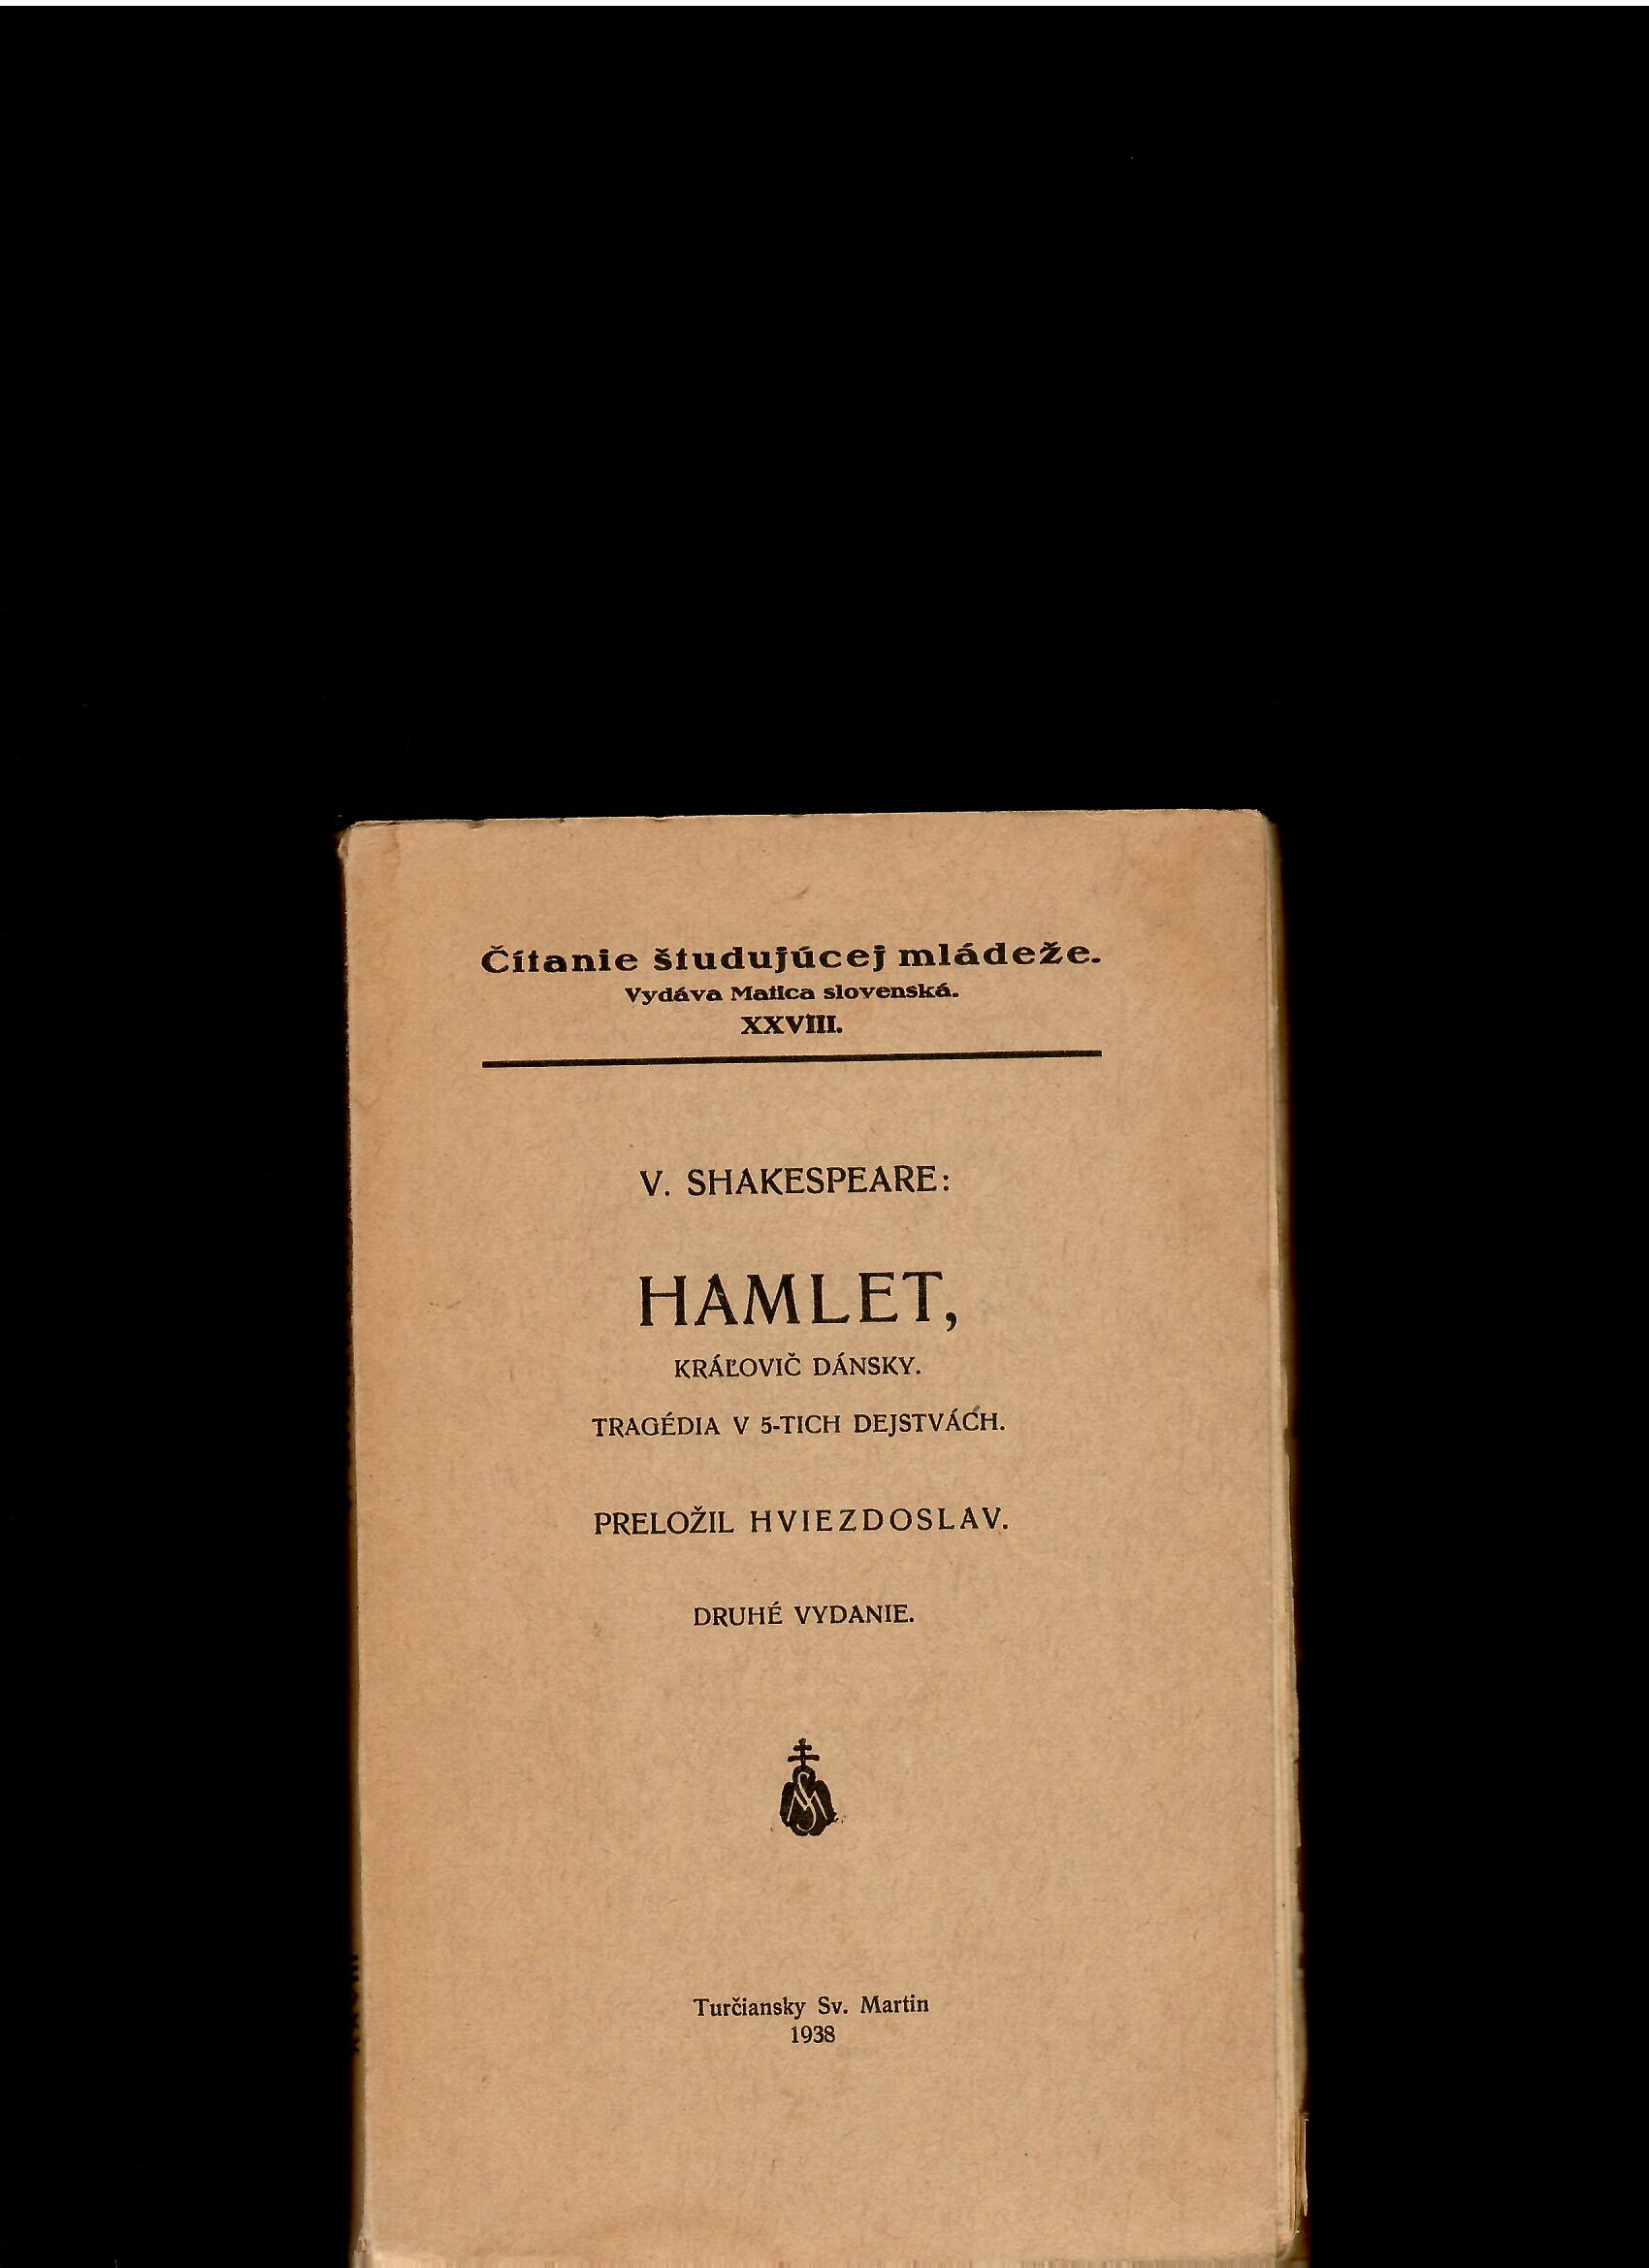 William Shakespeare: Hamlet, kráľovič dánsky. Tragédia v 5-tich dejstvách /1938/